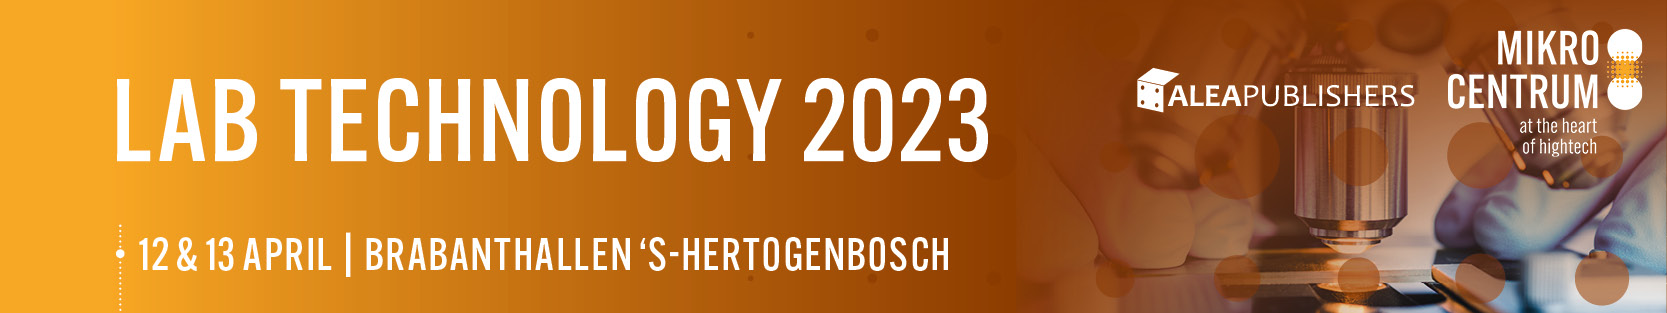 Lab Technology 2023 draait om snel, flexibel & veilig werken in en rond het lab